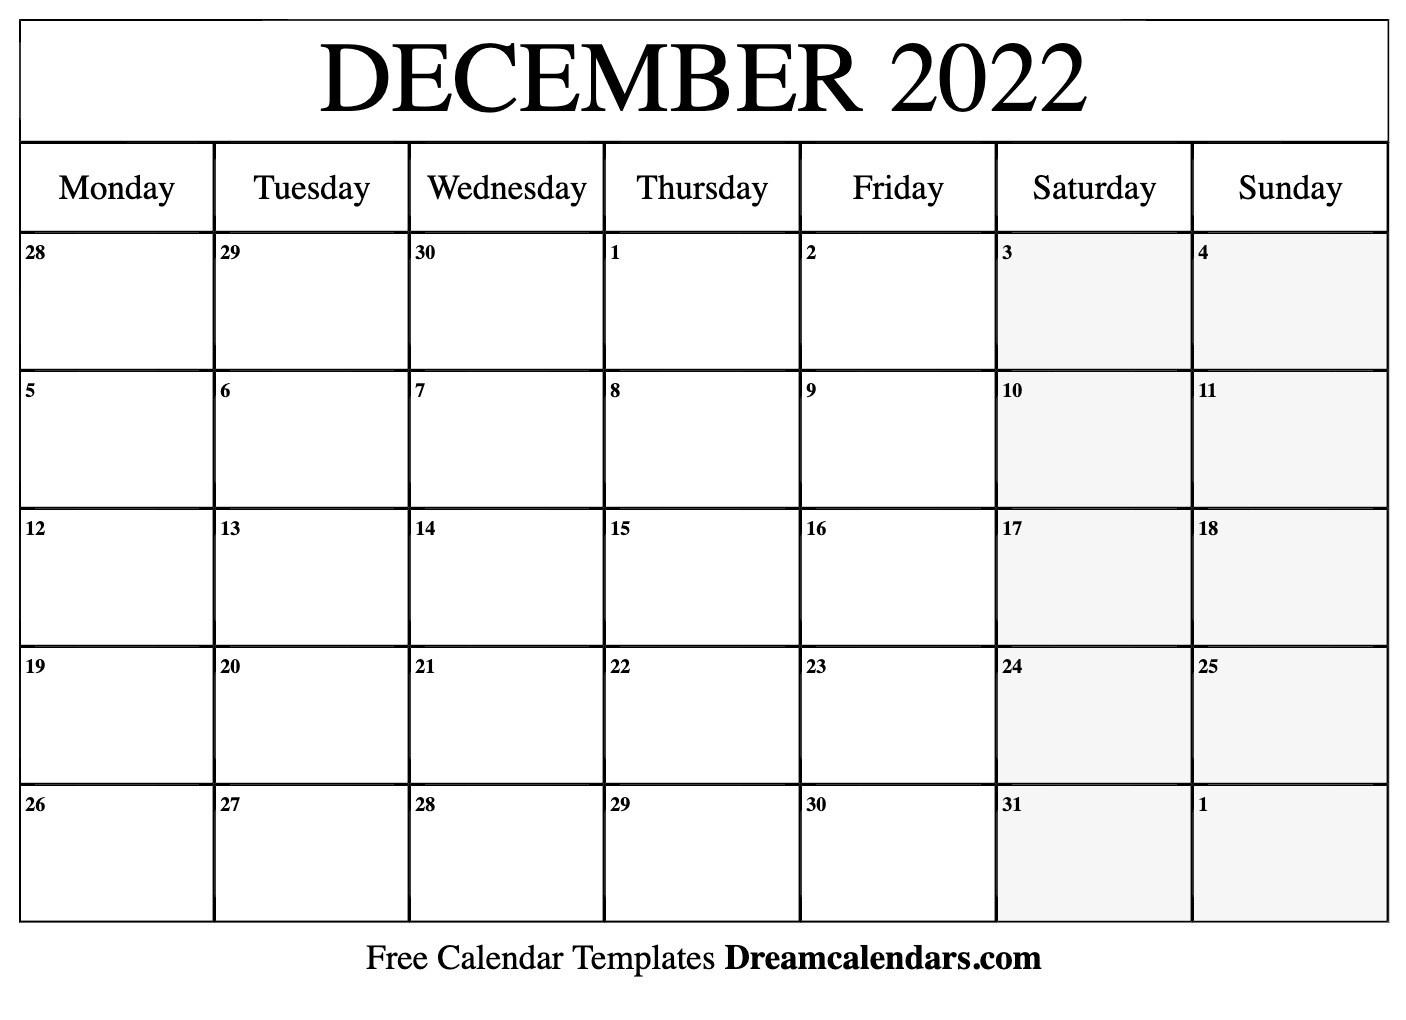 Calendar December 2022 Gif